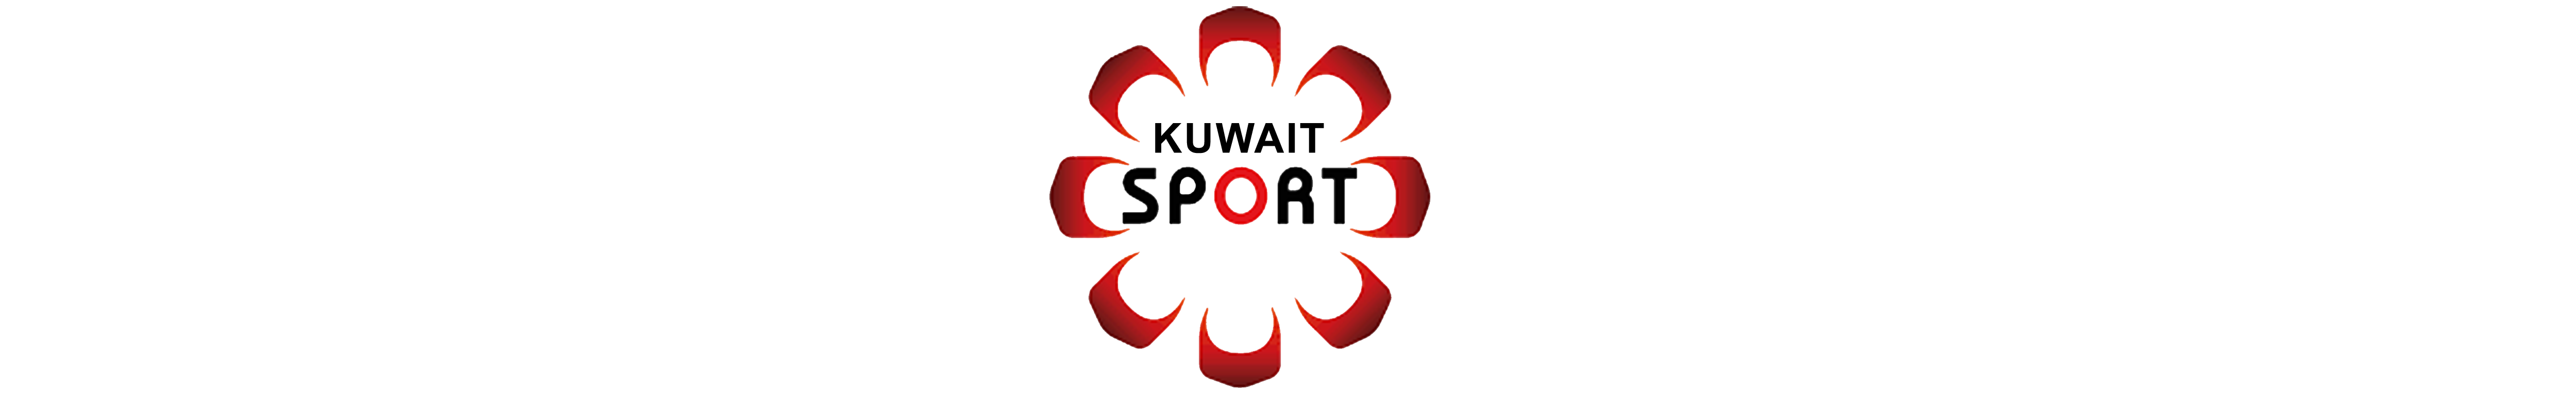 kuwait sport